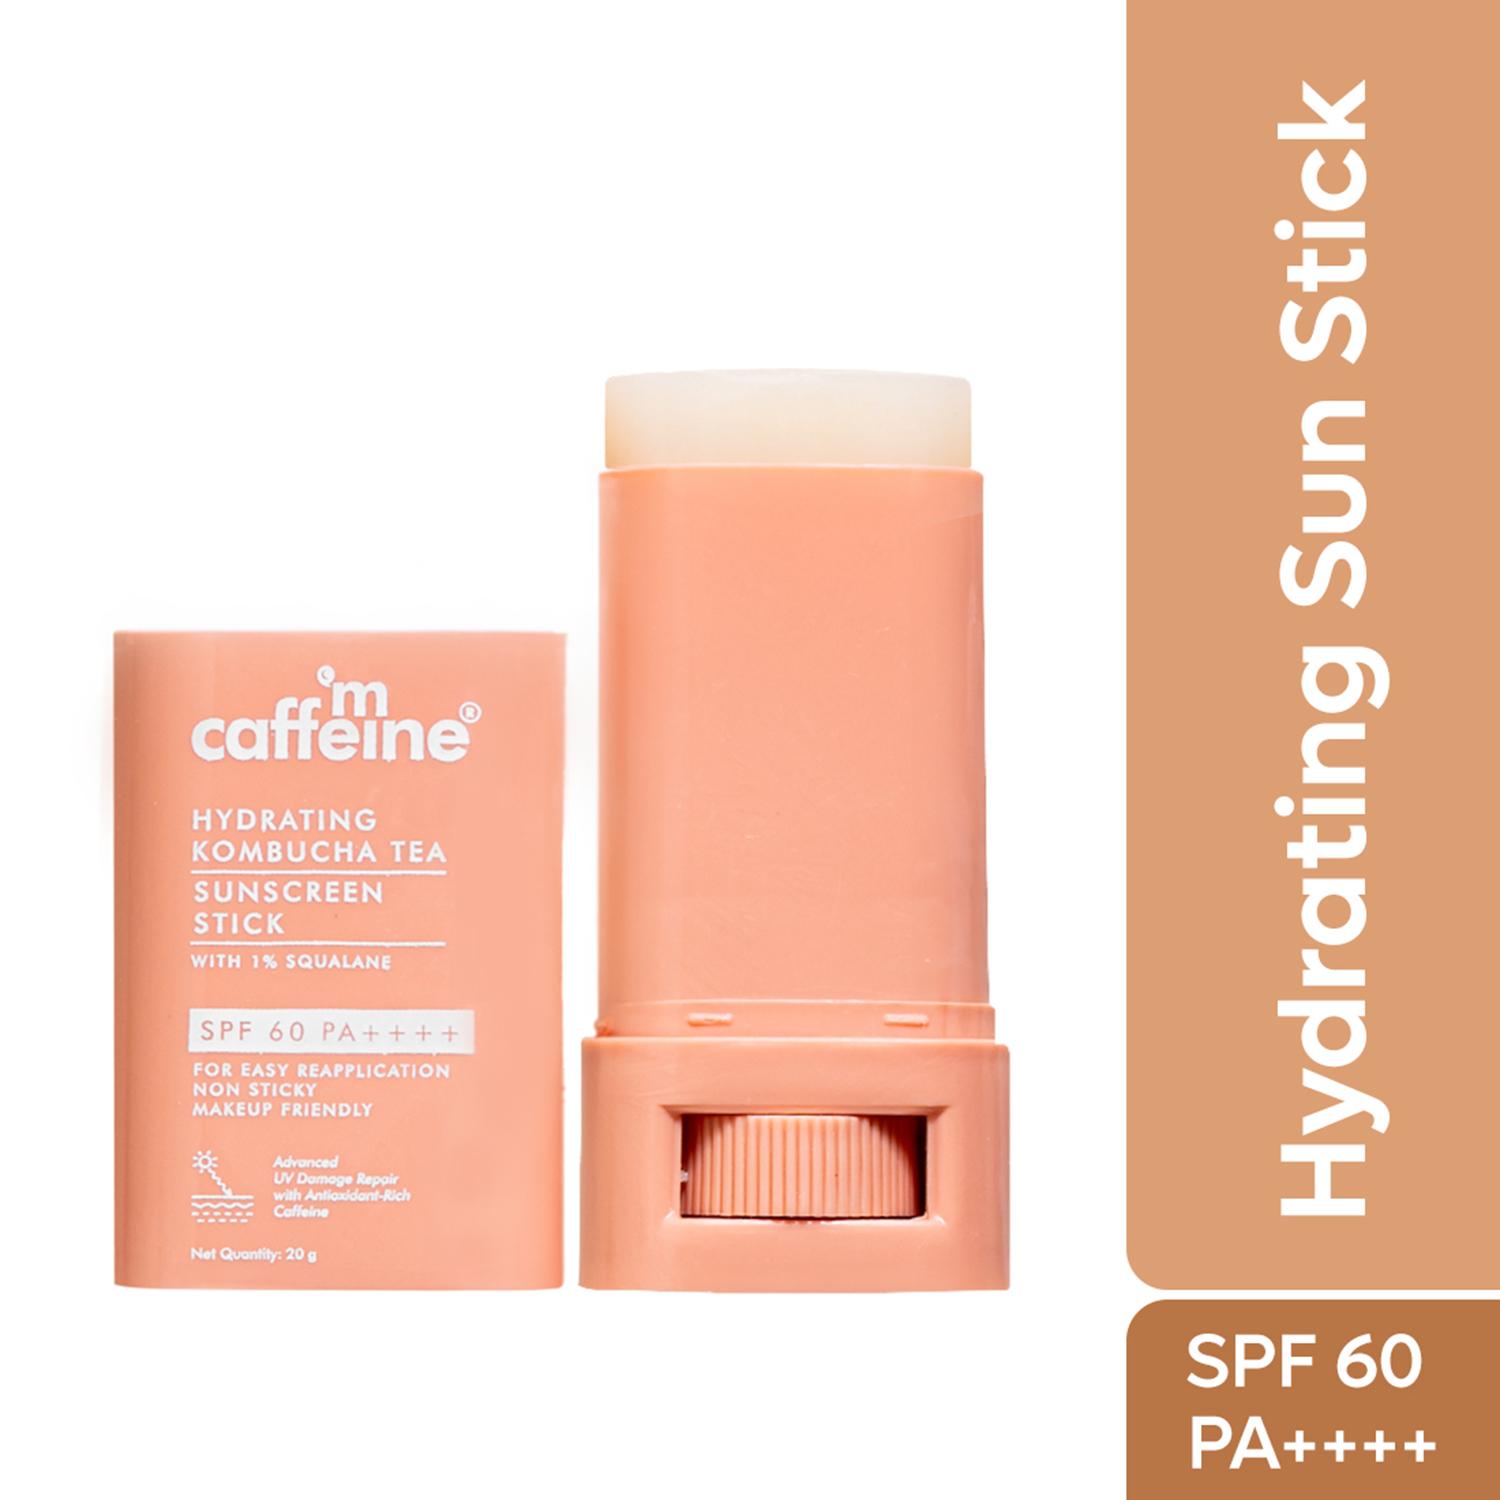 mCaffeine Kombucha Tea Sunscreen Stick with 1% Squalane SPF 60 PA++++ (20 g)